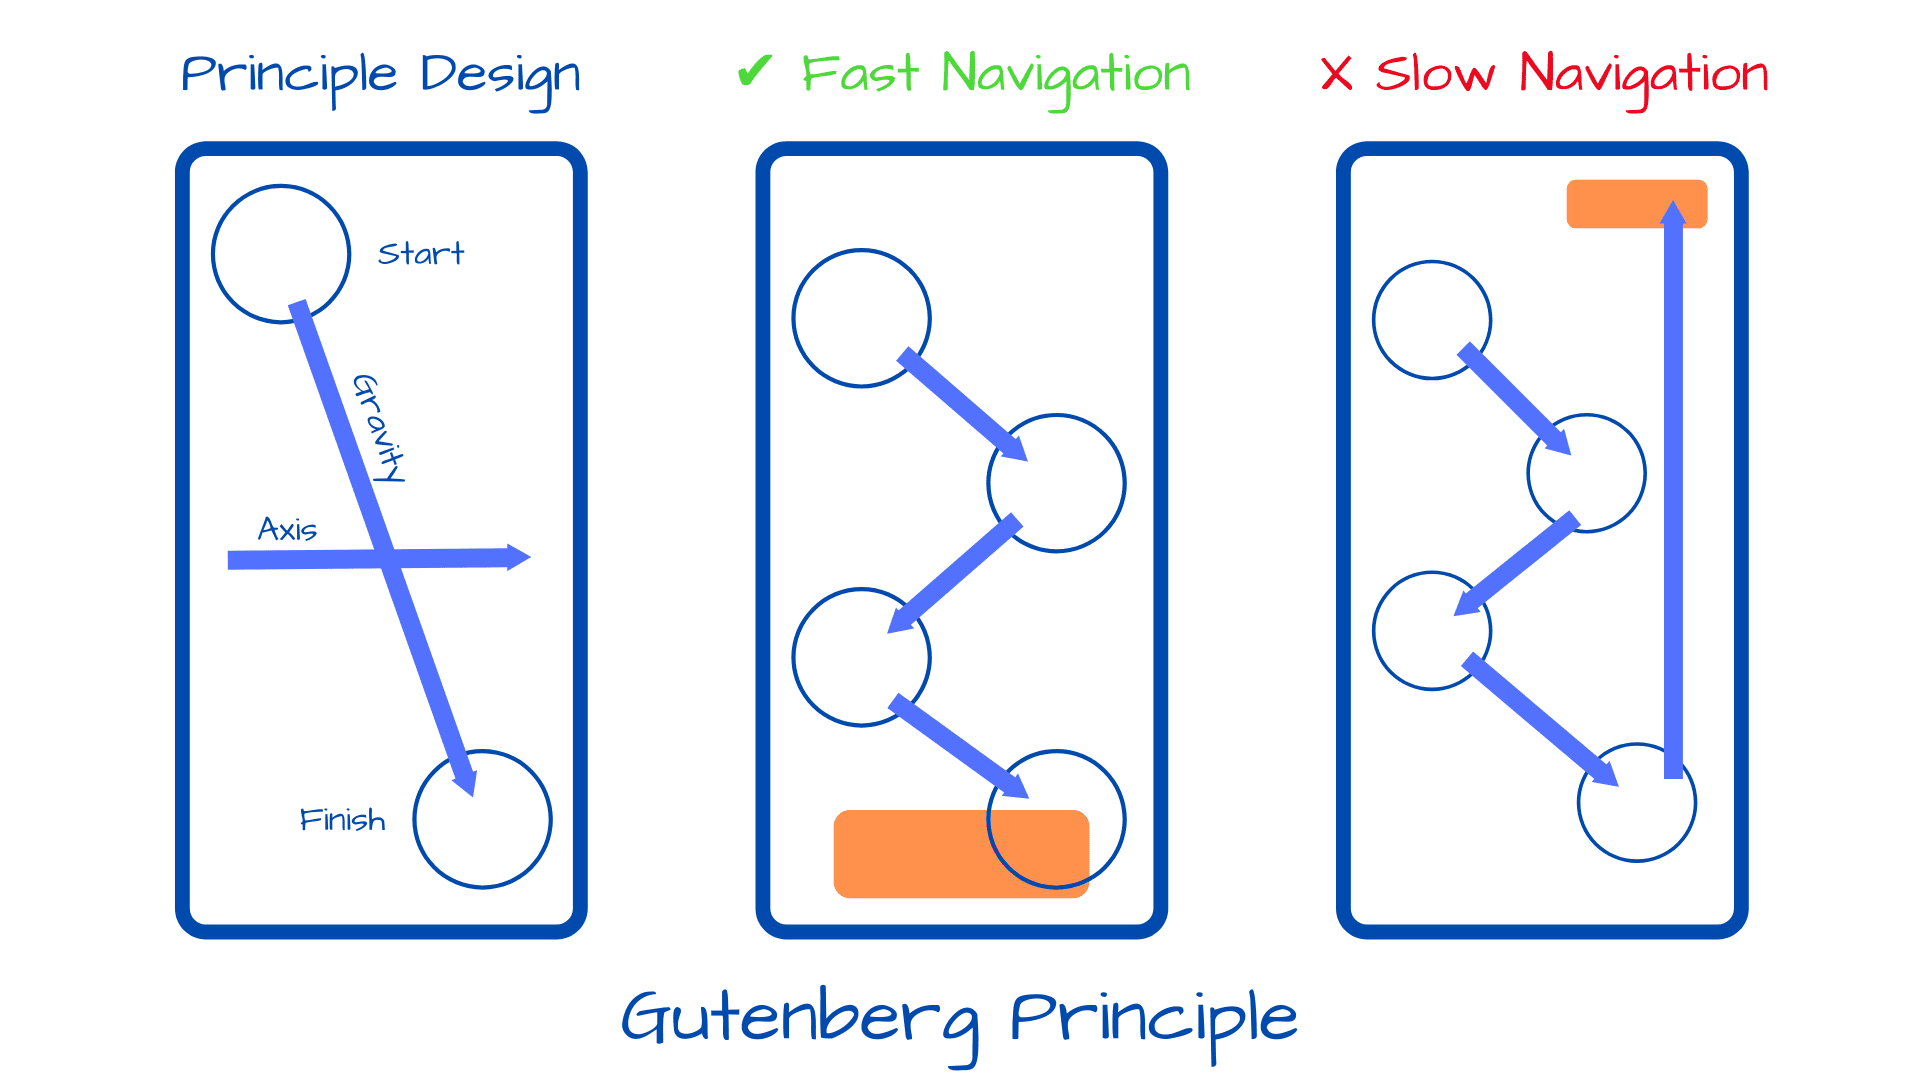 Gutenberg Principle